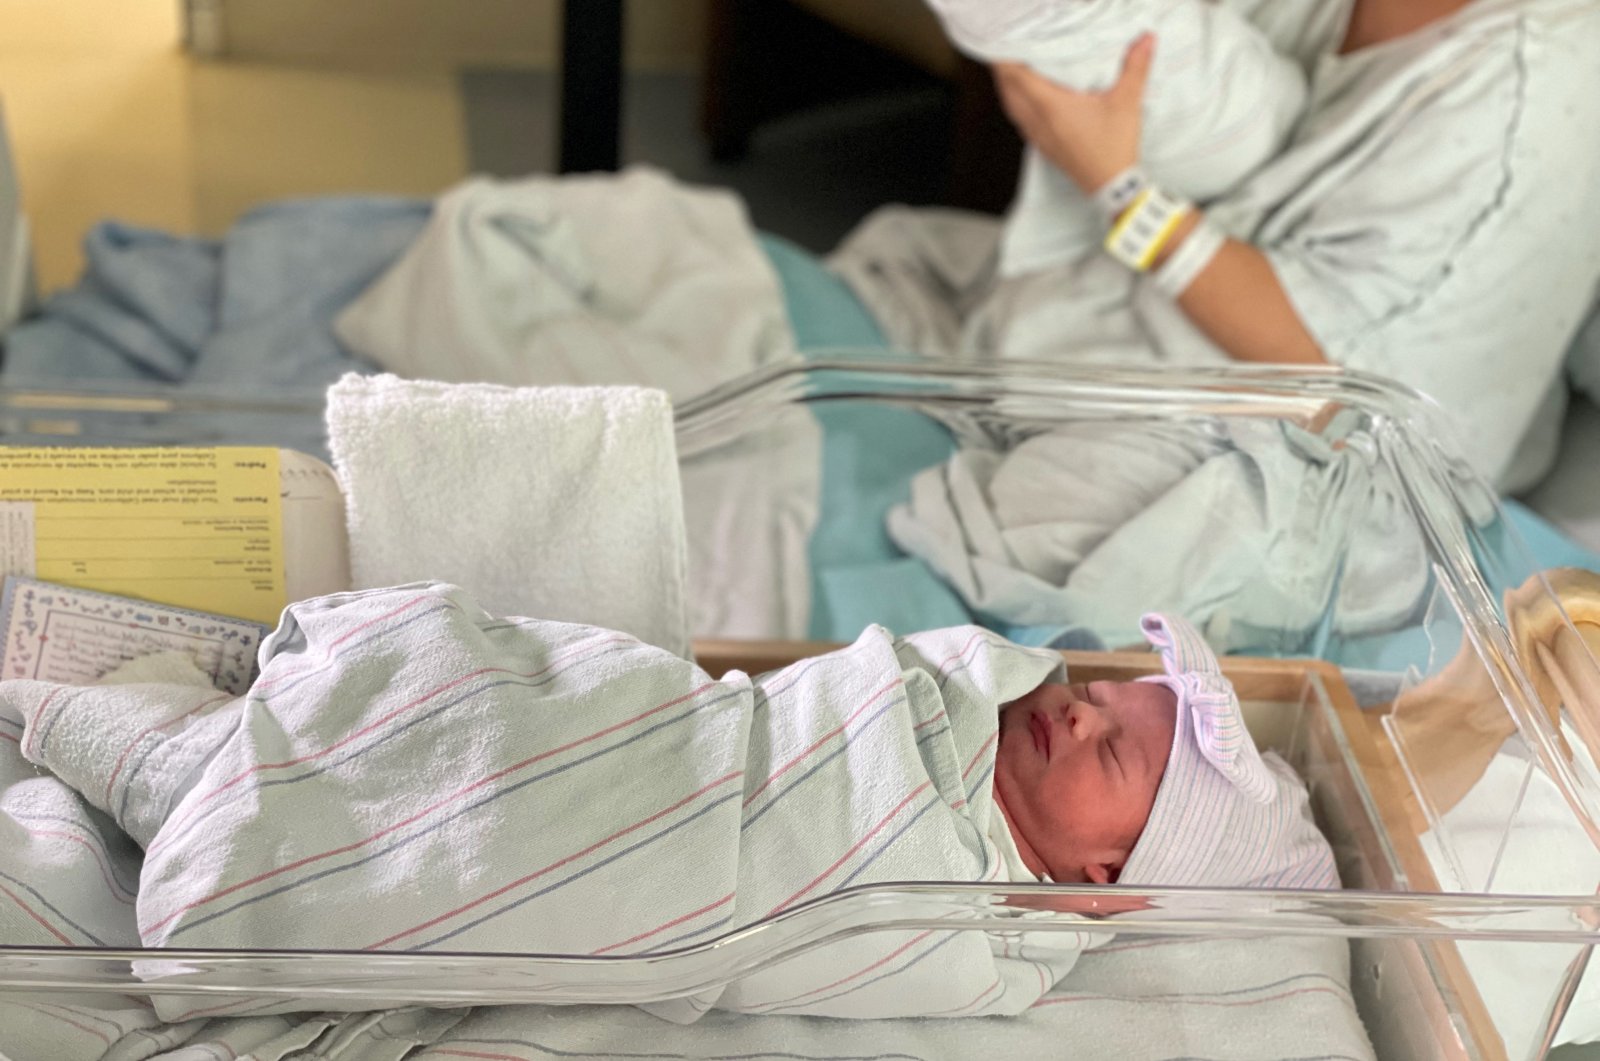 Aylin Trujillo, born at midnight on Jan. 1, 2022, lies in a bassinet while her twin brother Alfredo Trujillo, born at 11:45 p.m. on Dec. 31, 2021, is held, in Salinas, California, U.S., Jan. 1, 2022. (Natividad Medical Center/via Reuters)